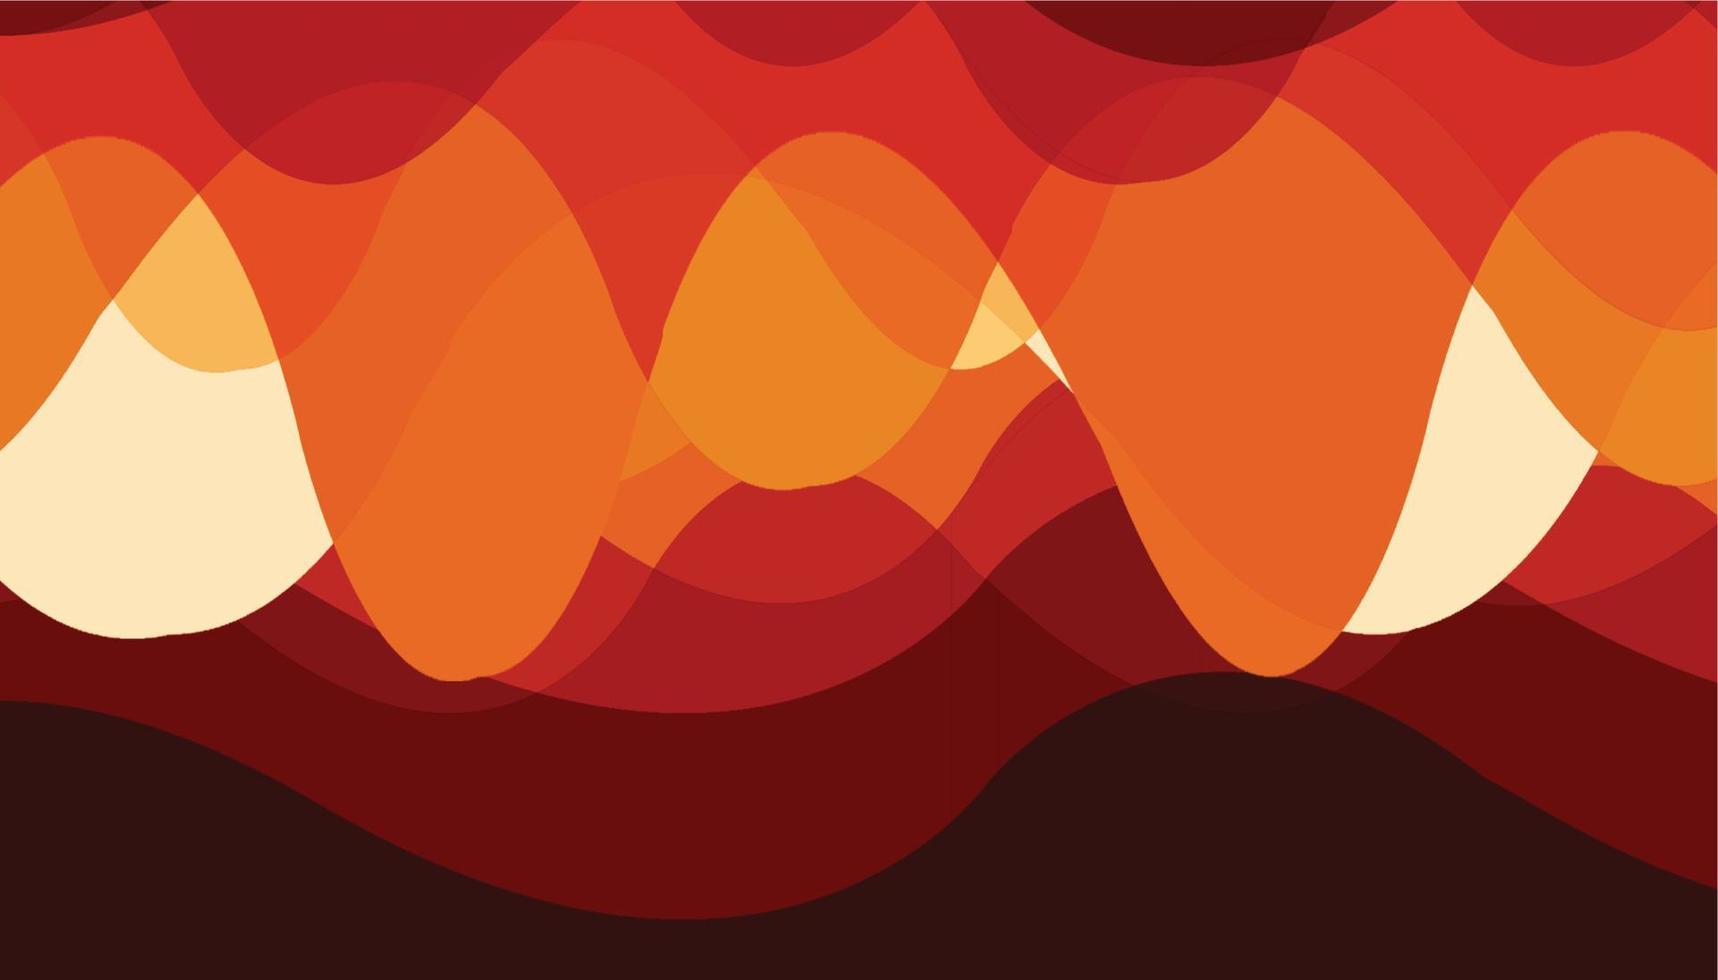 Orange and Yellow Autumn Waves background illustration vector